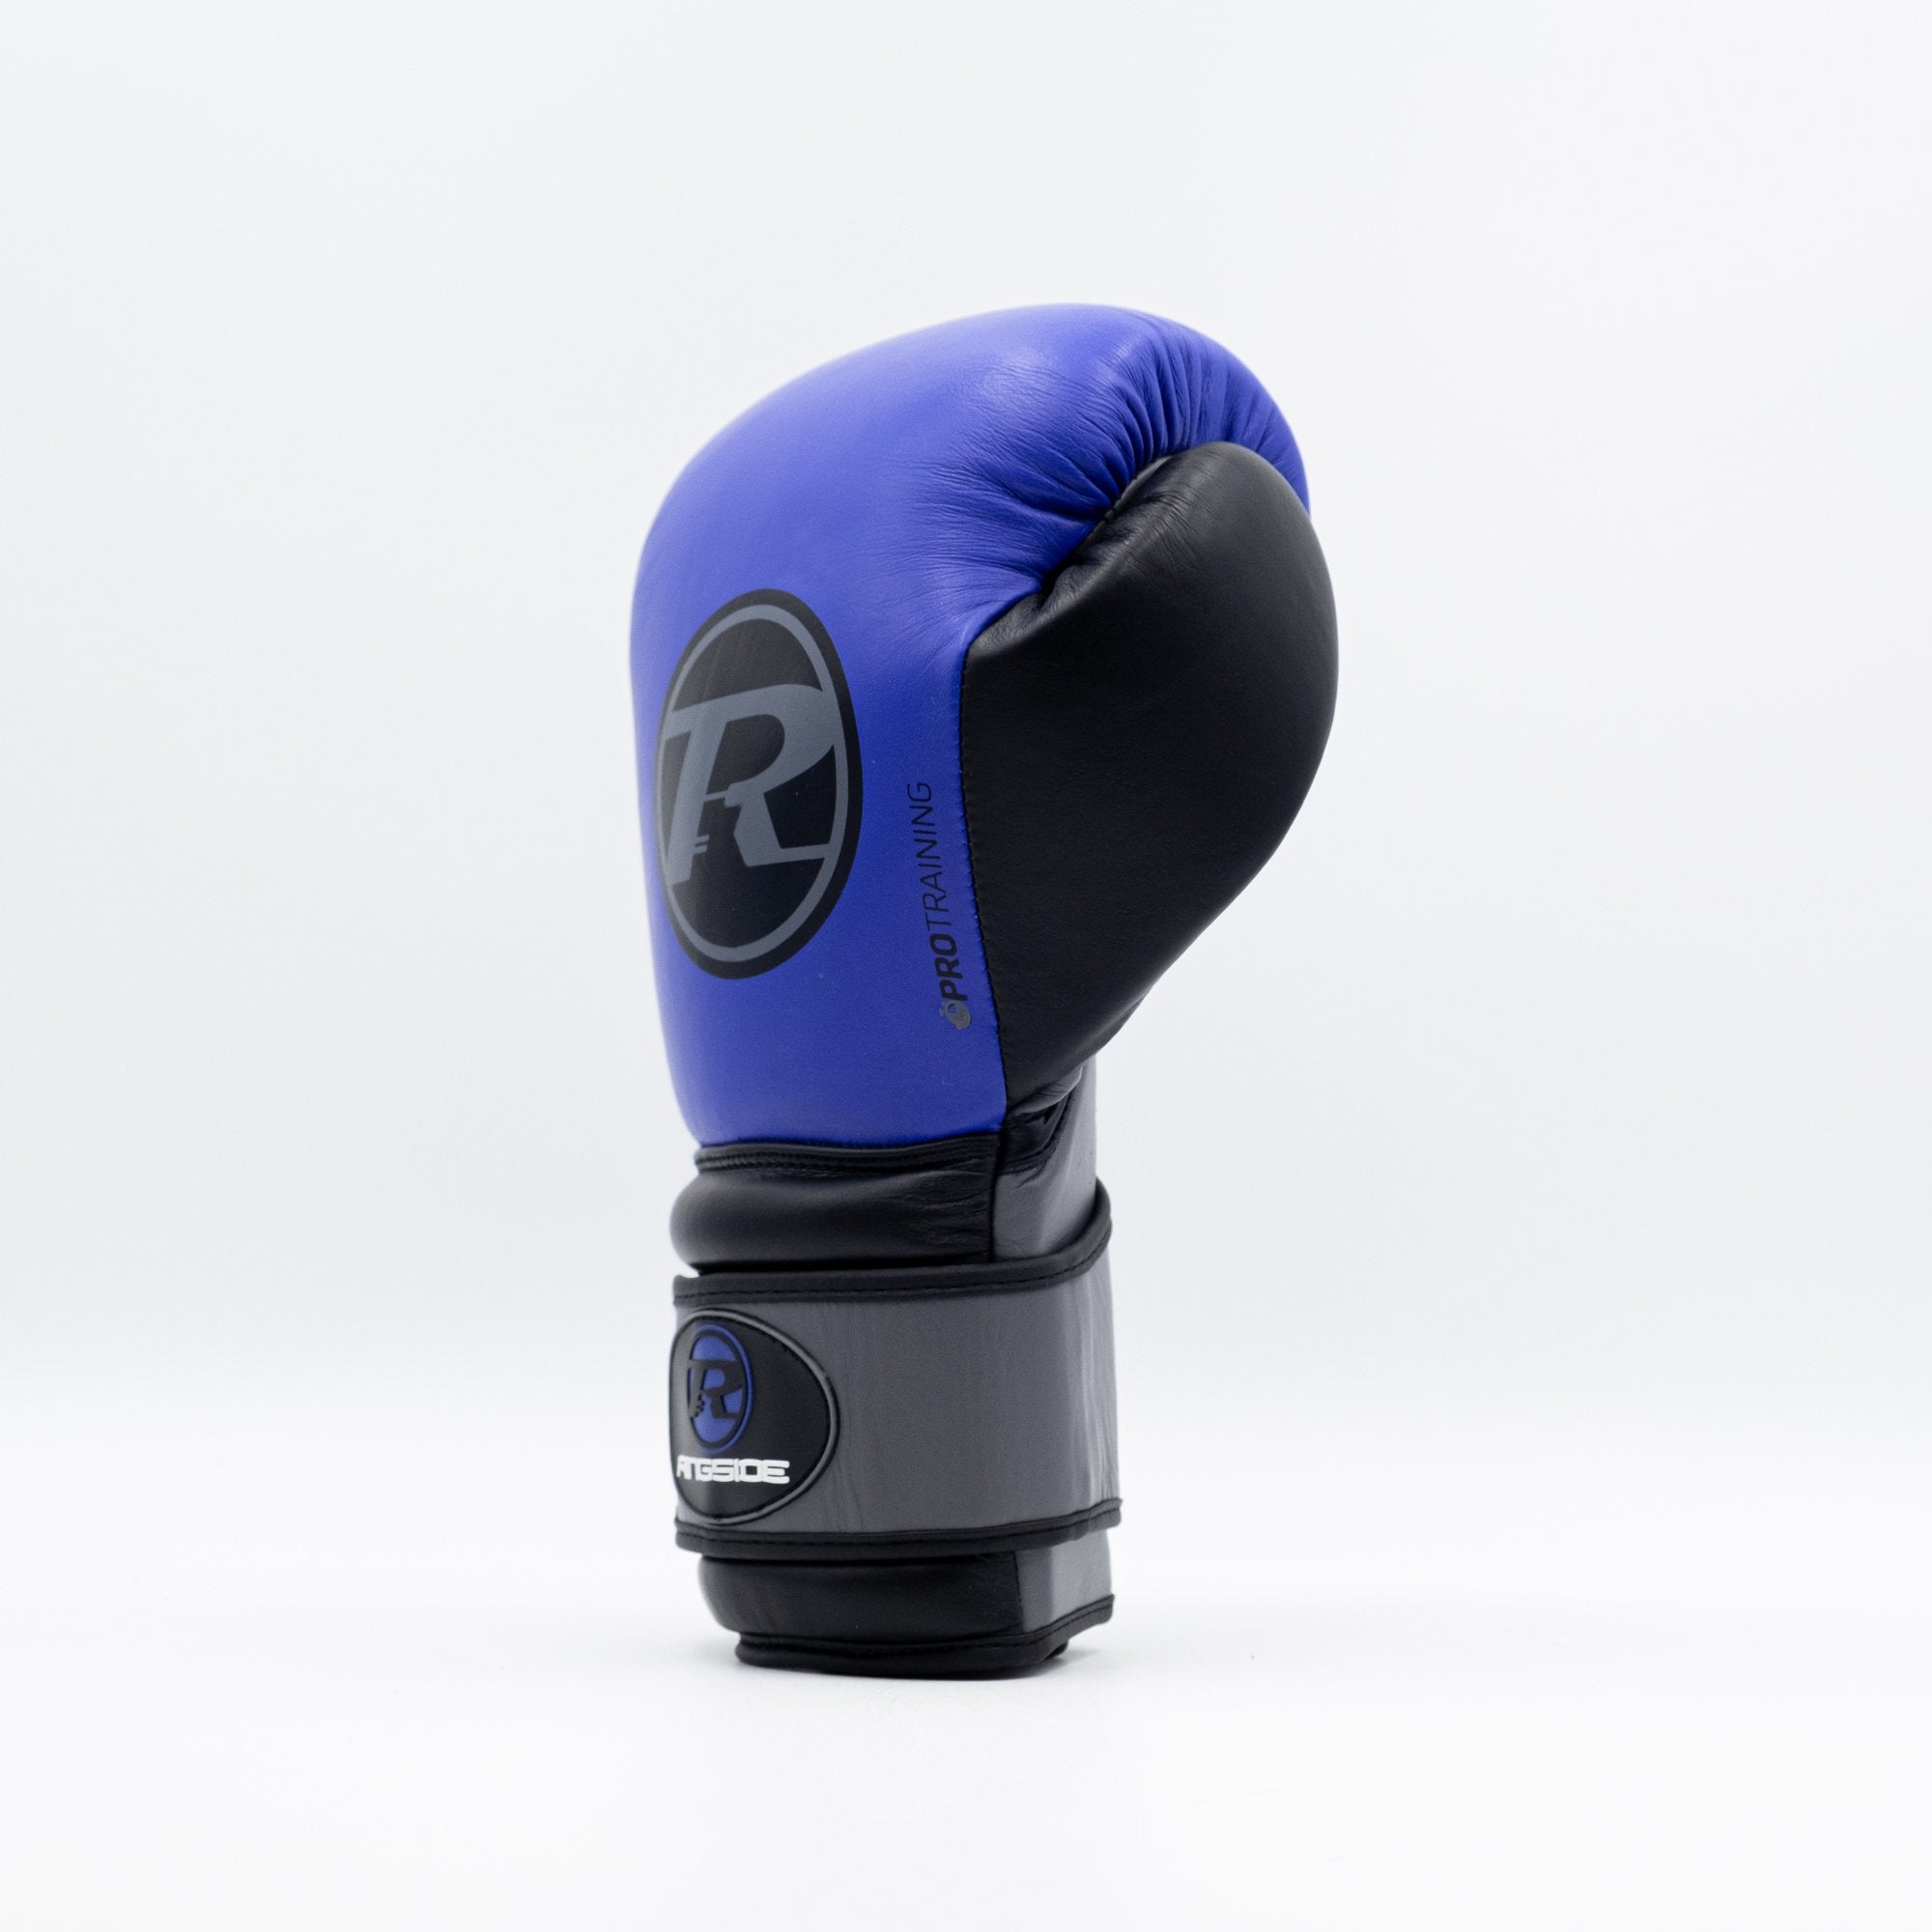 Pro Training G2 Strap Boxing Glove Cobalt / Slate